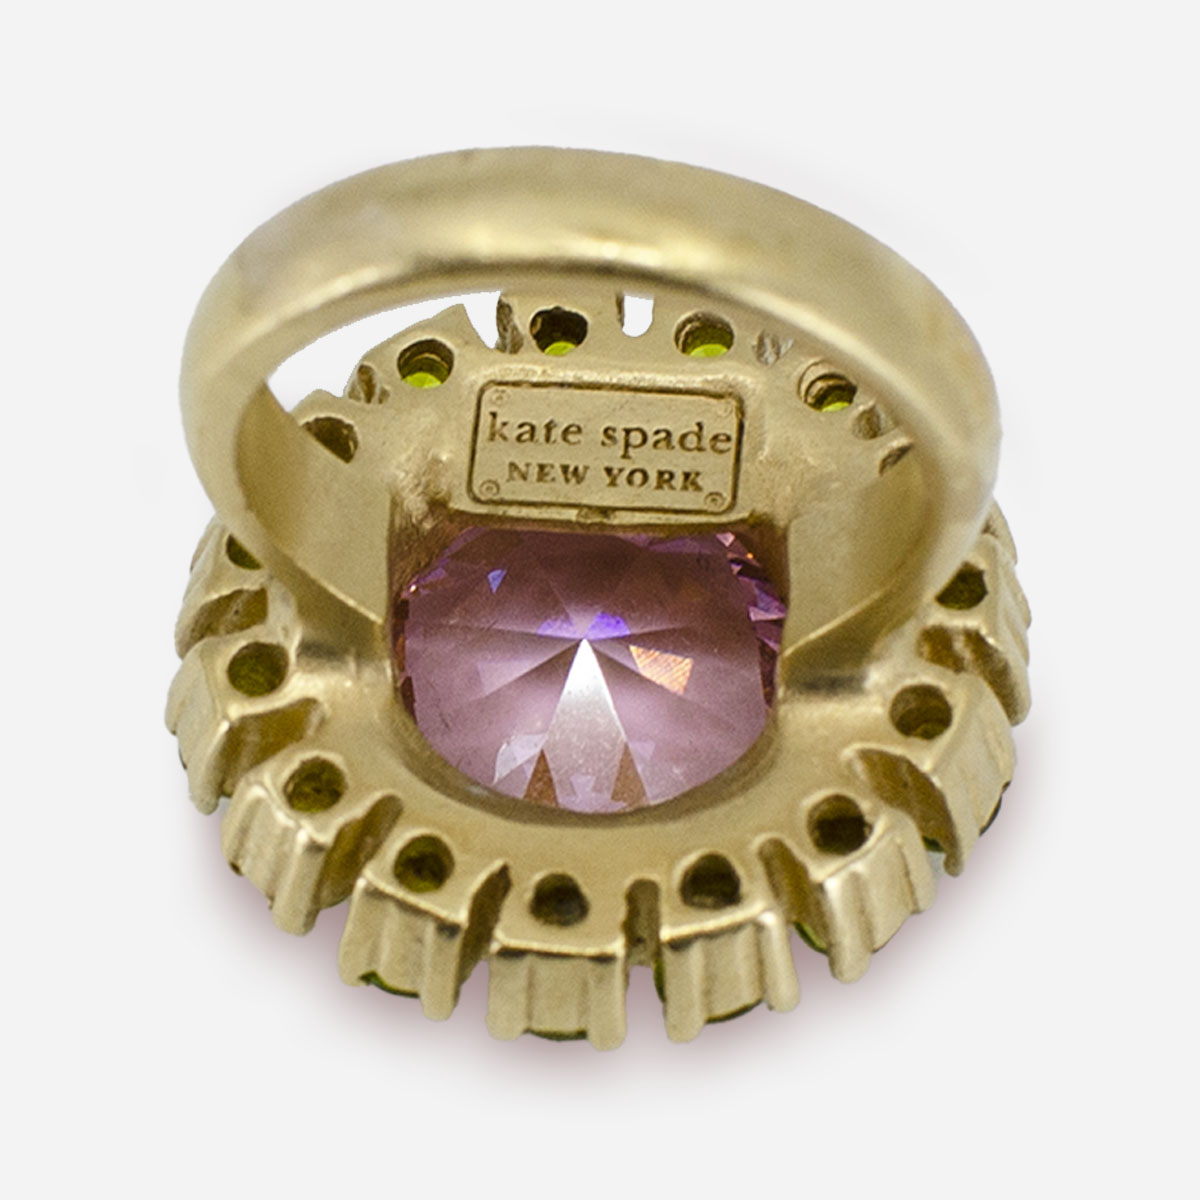 Kade Spade jewelry mark